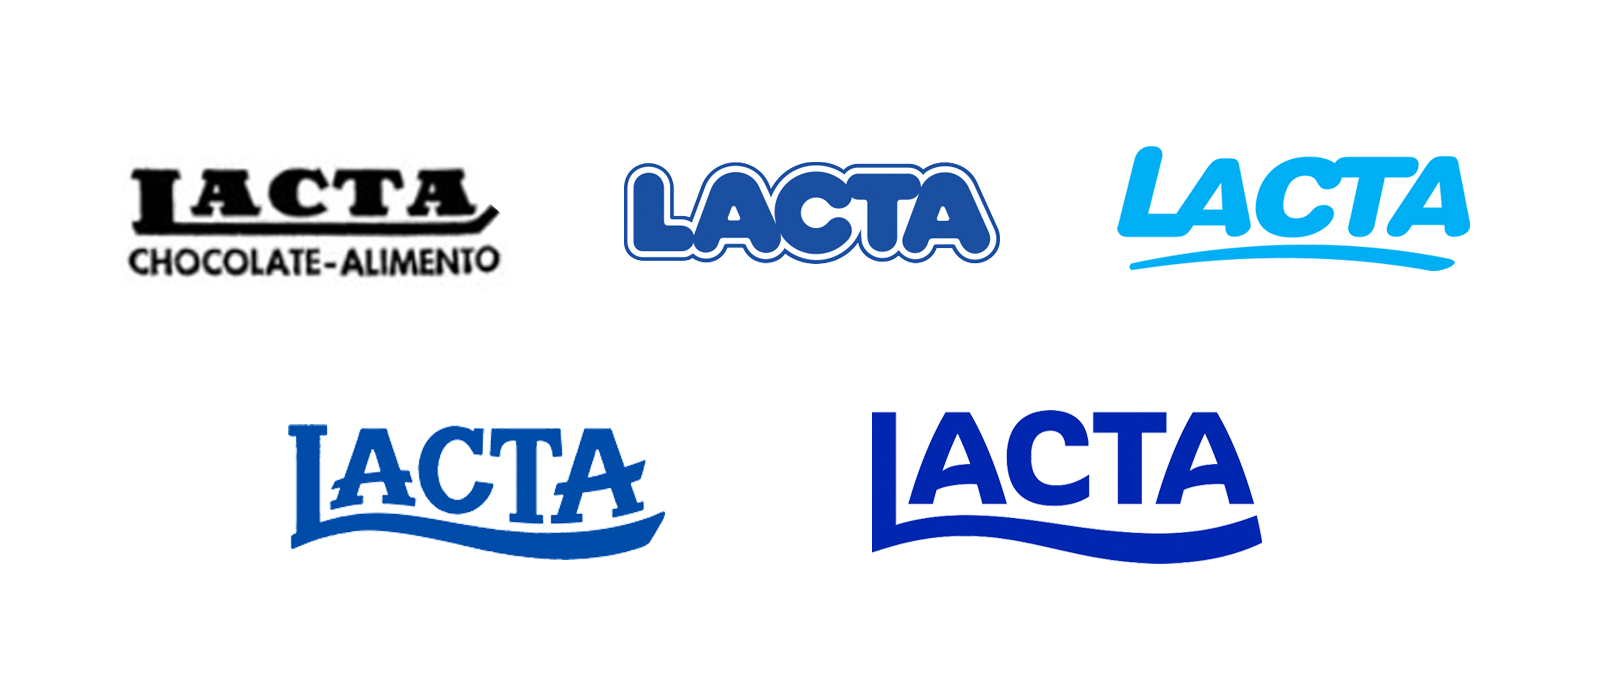 Lacta apresenta seu novo logo e identidade visual | Update or Die!